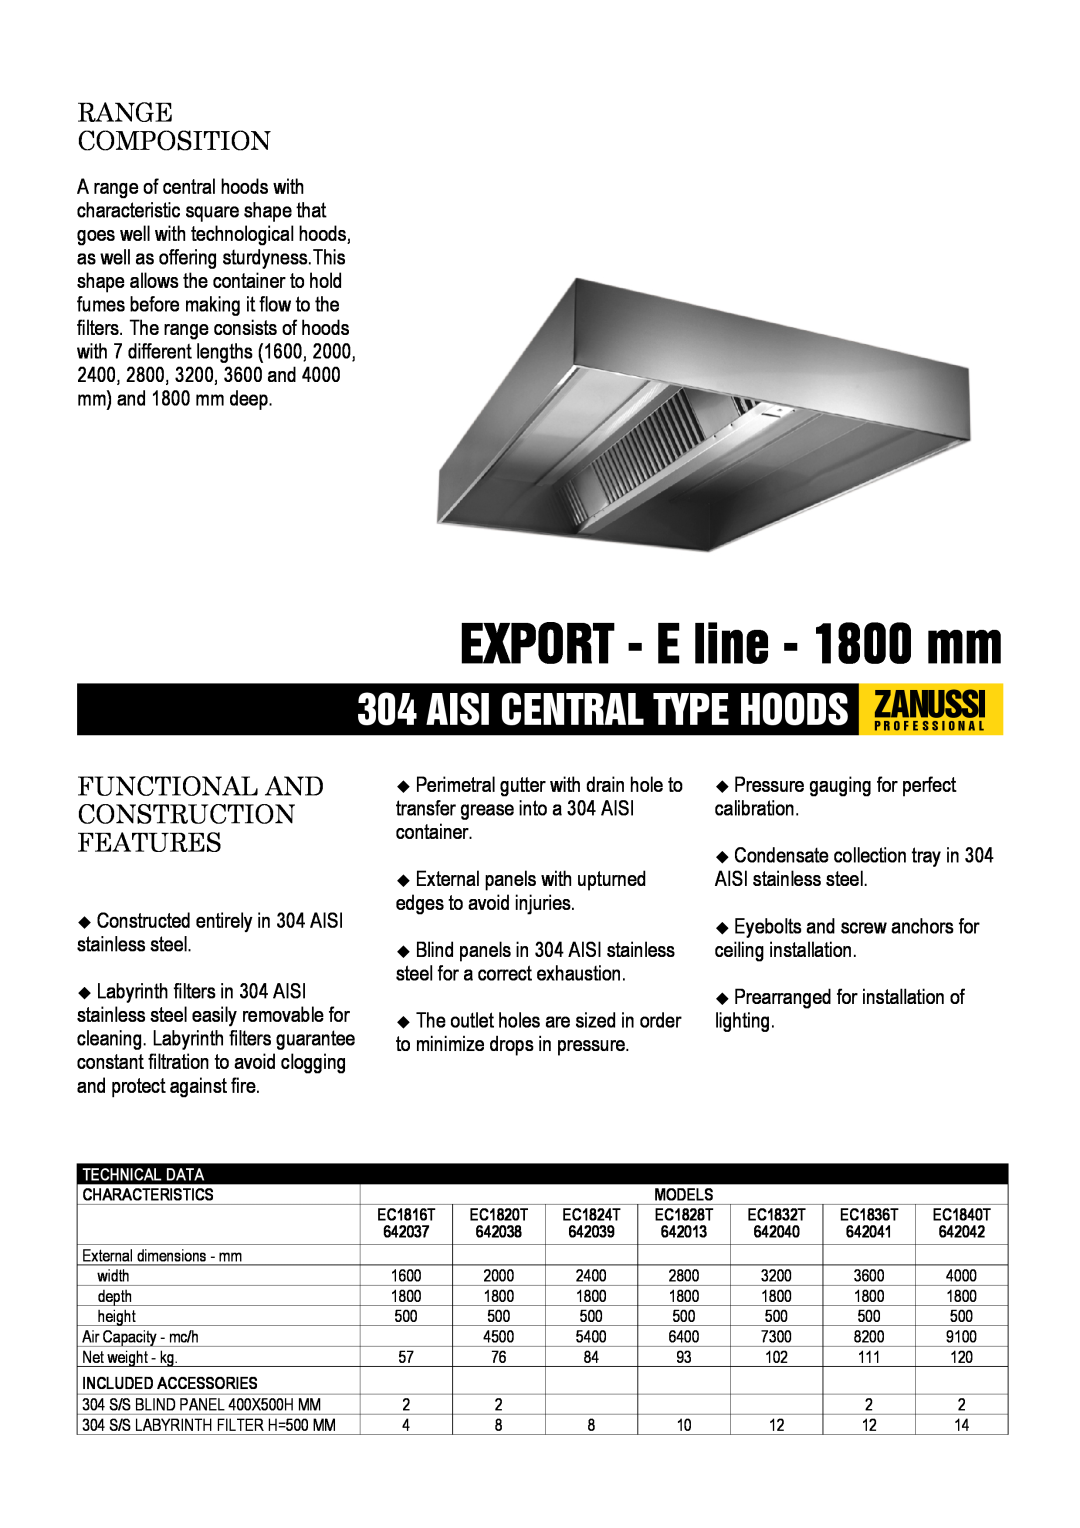 Zanussi EC1824T, EC1832T dimensions EXPORT - E line - 1800 mm, Range Composition, Functional And Construction Features 